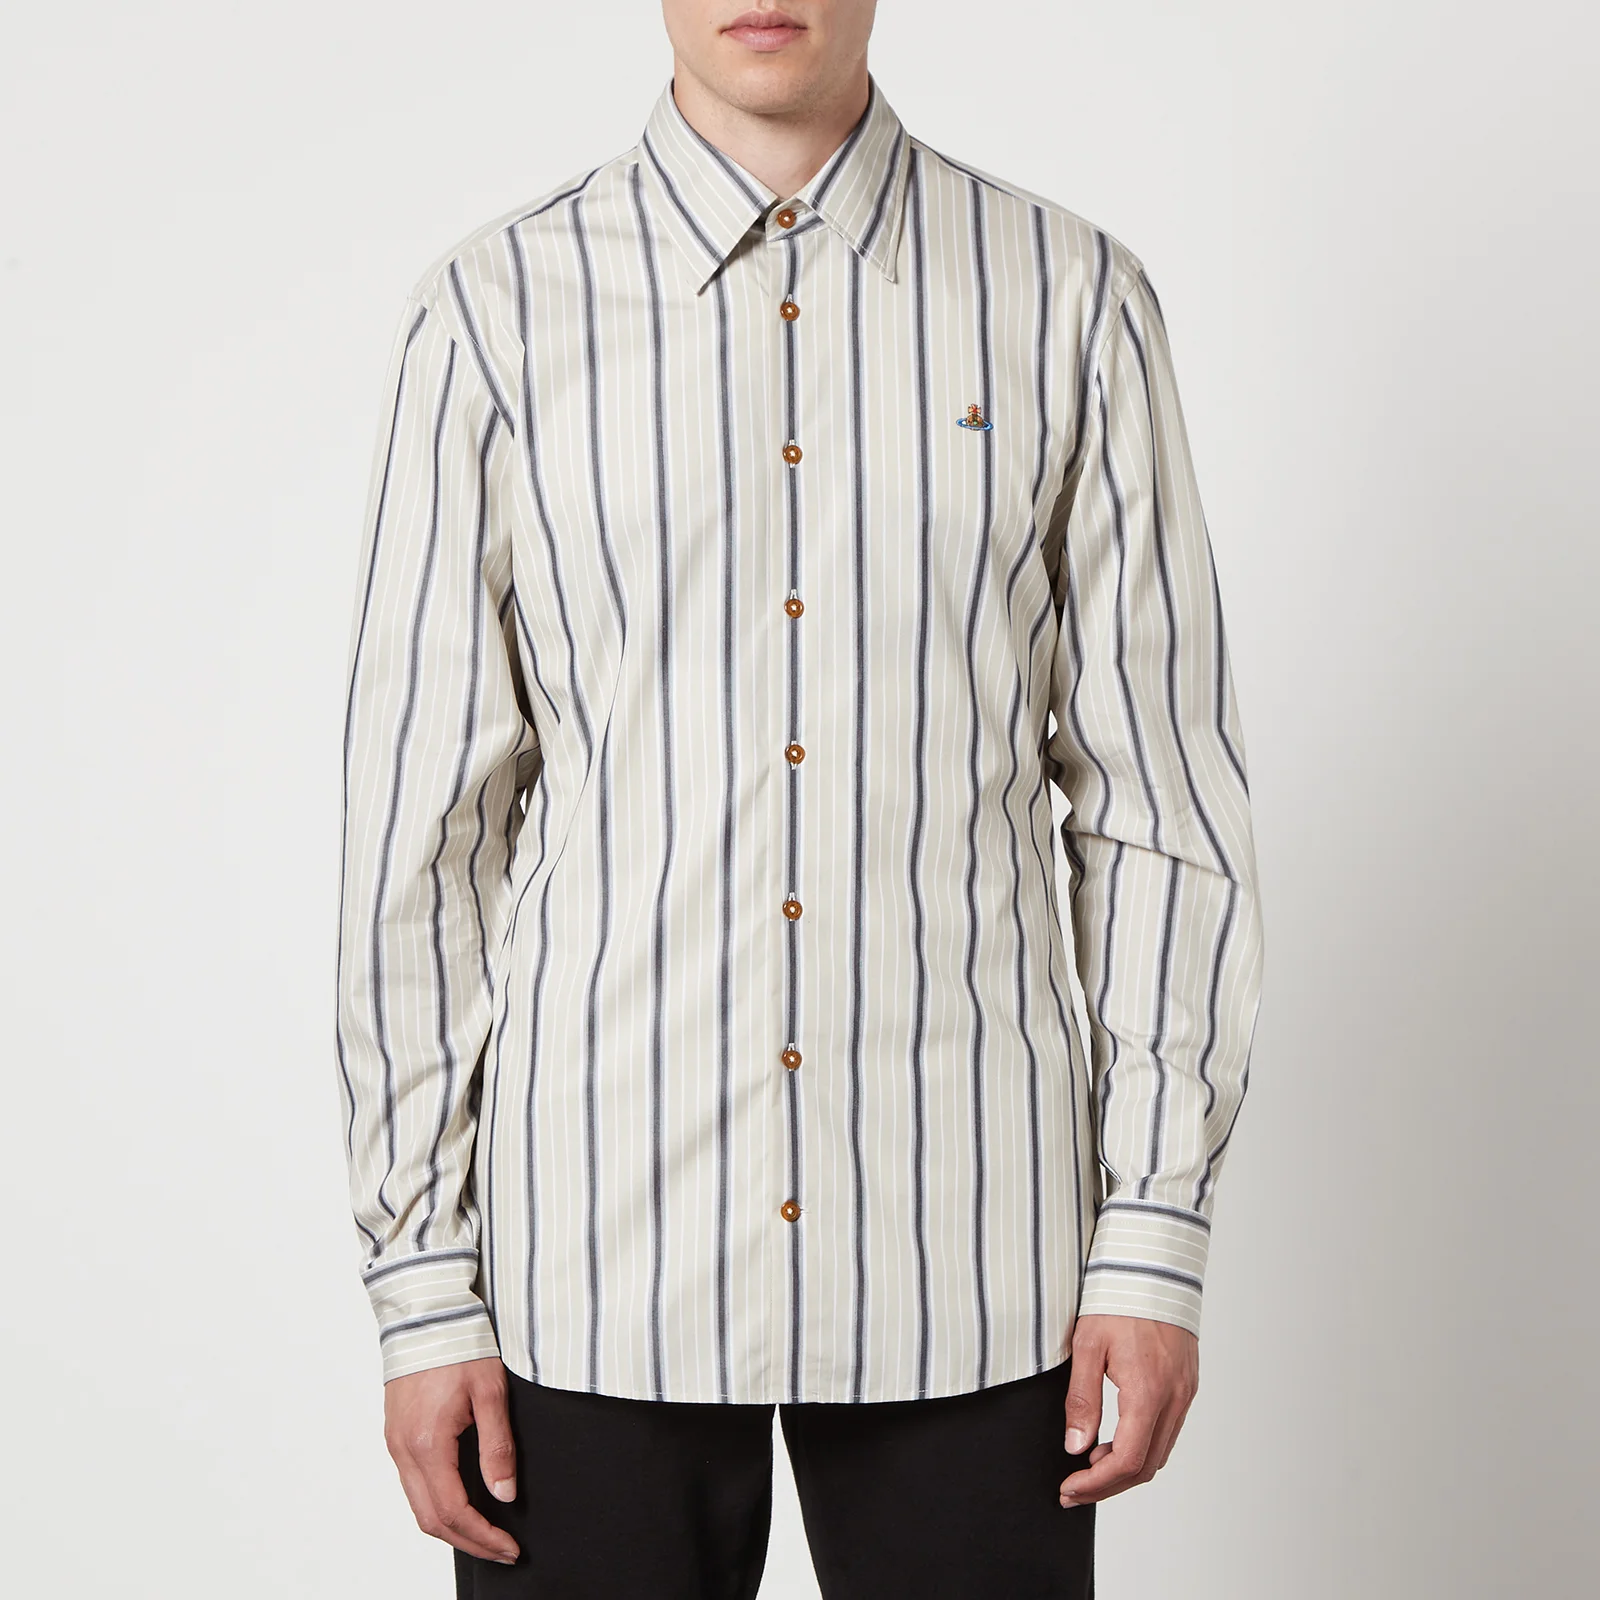 Vivienne Westwood Ghost Striped Cotton Shirt - IT 46/S Image 1